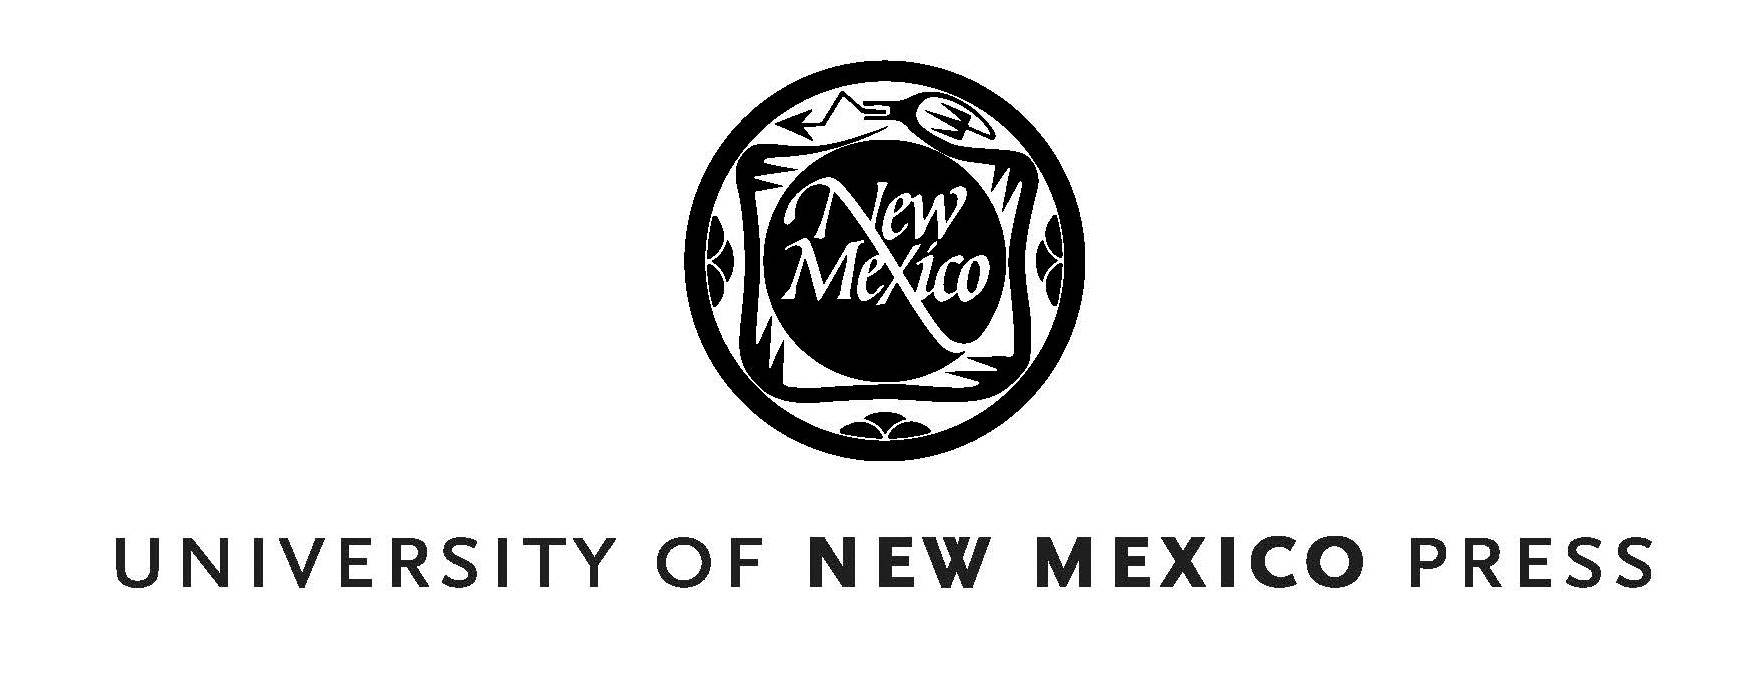 Universiteteti New Mexico Press Logotyp Wallpaper